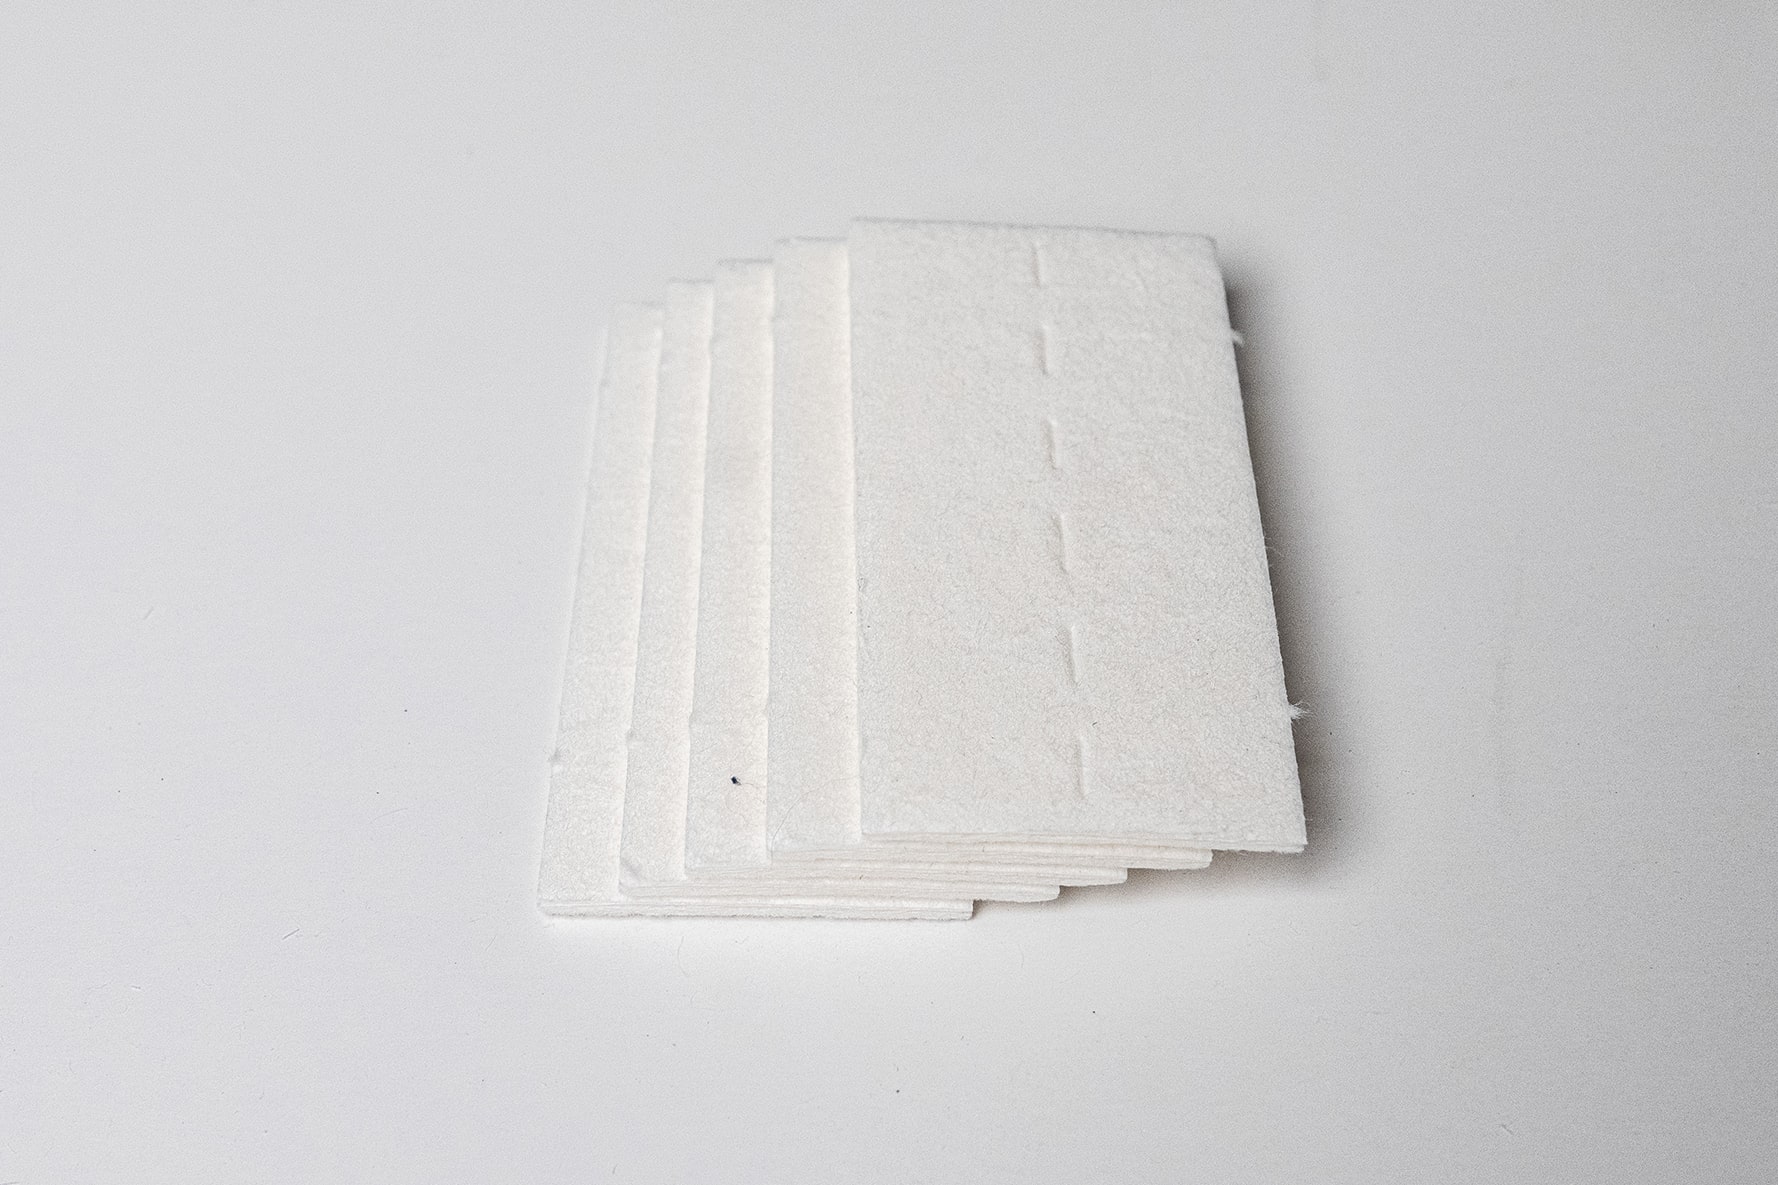 Absorbent Paper - Blotter Paper